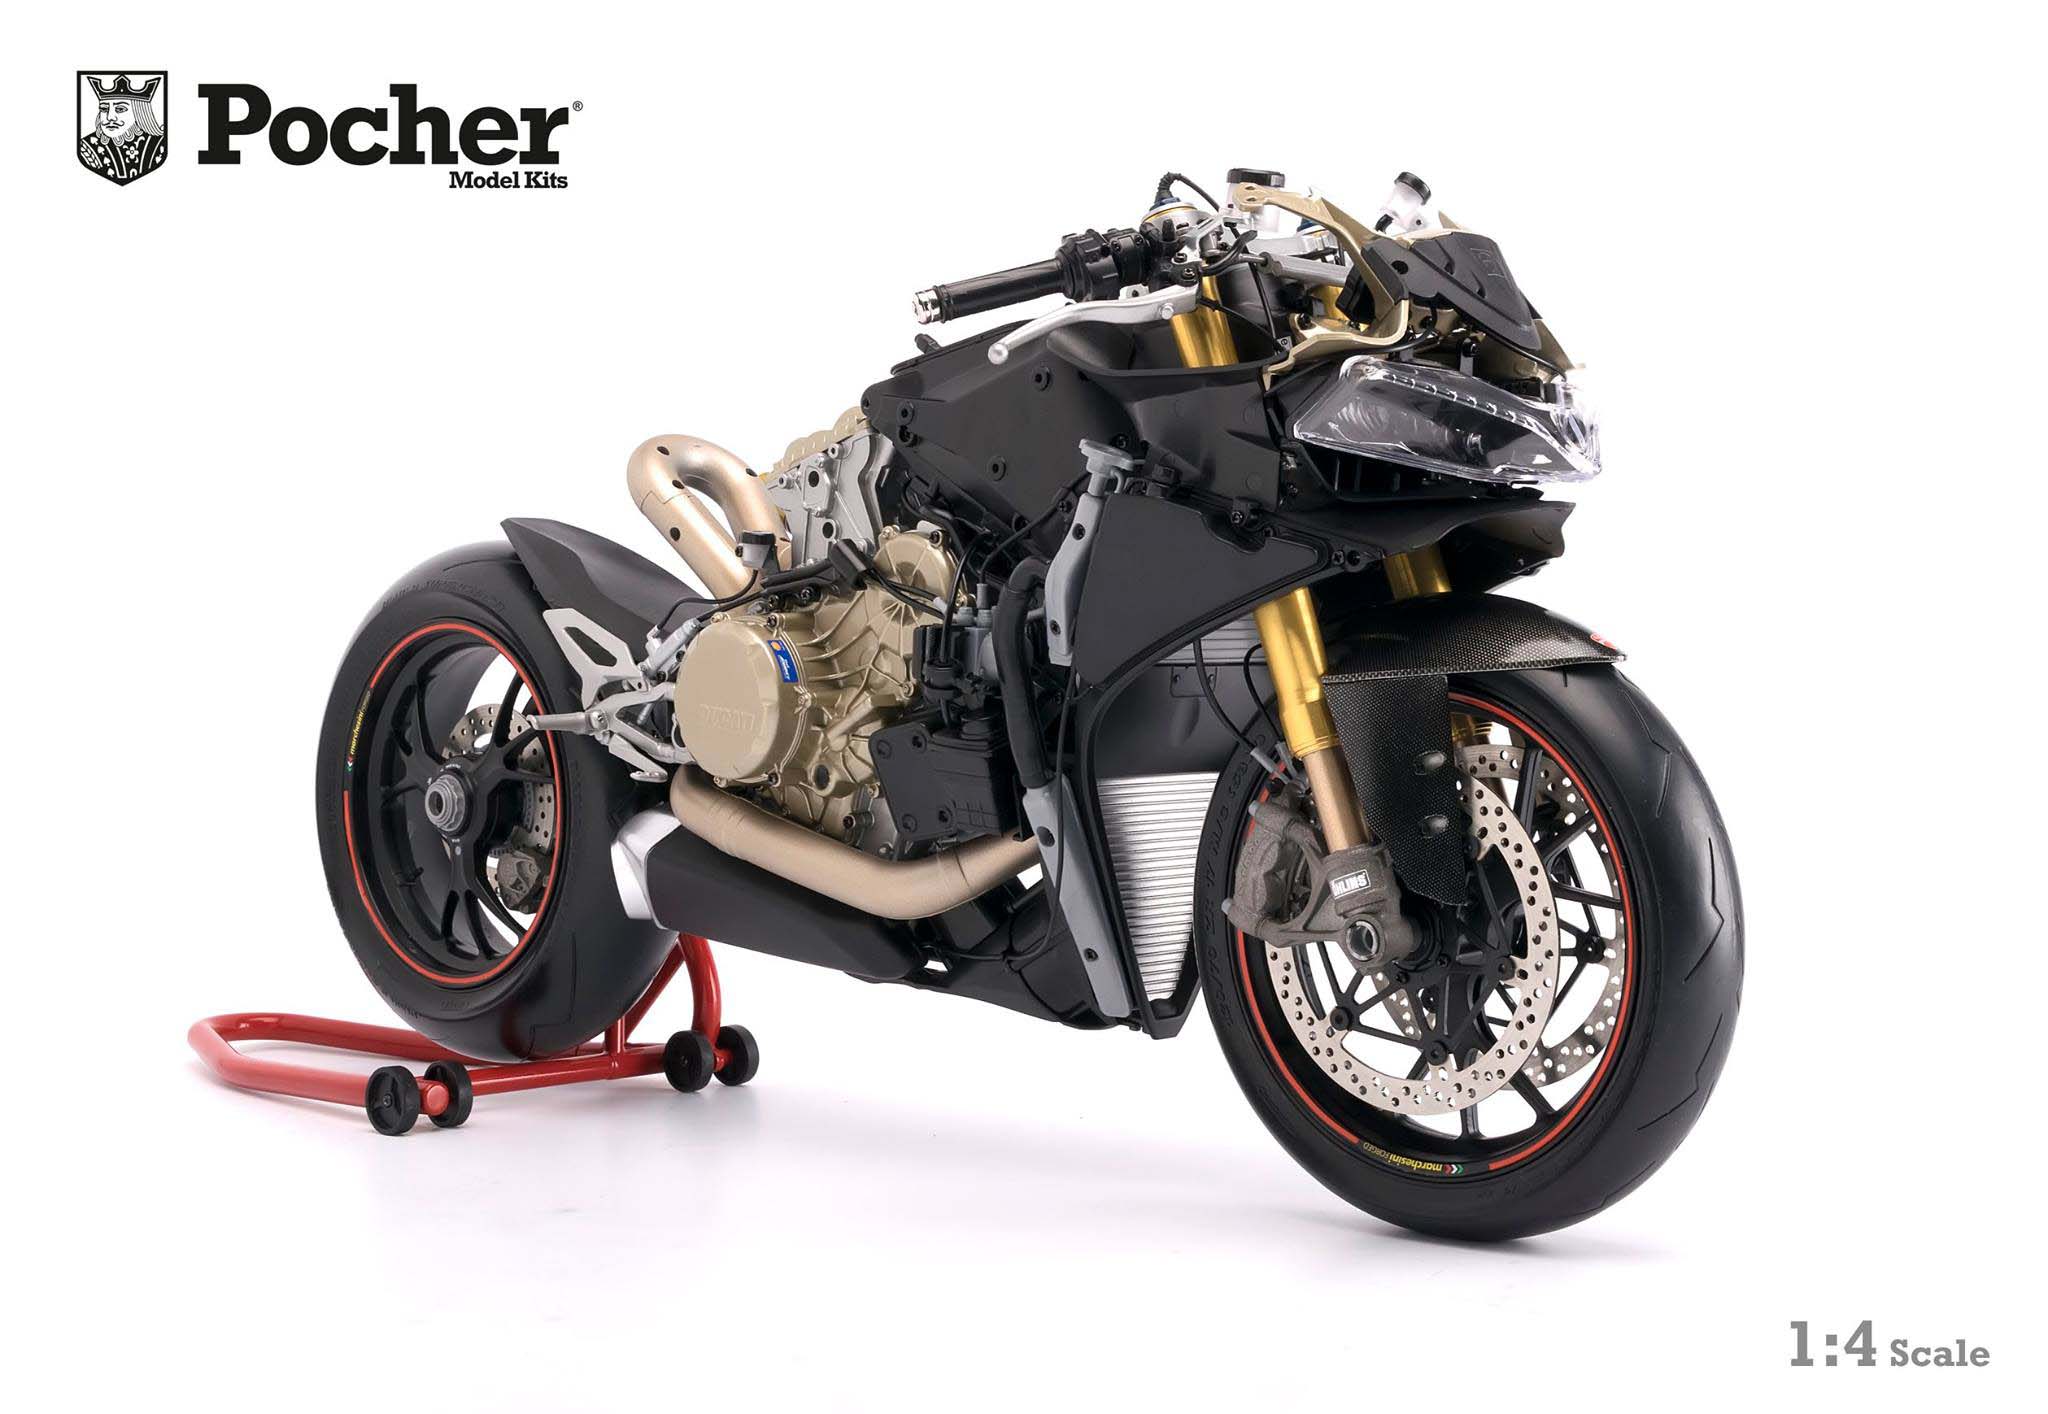 Pocher 1:4 Scale Model of the Ducati 1299 Panigale S